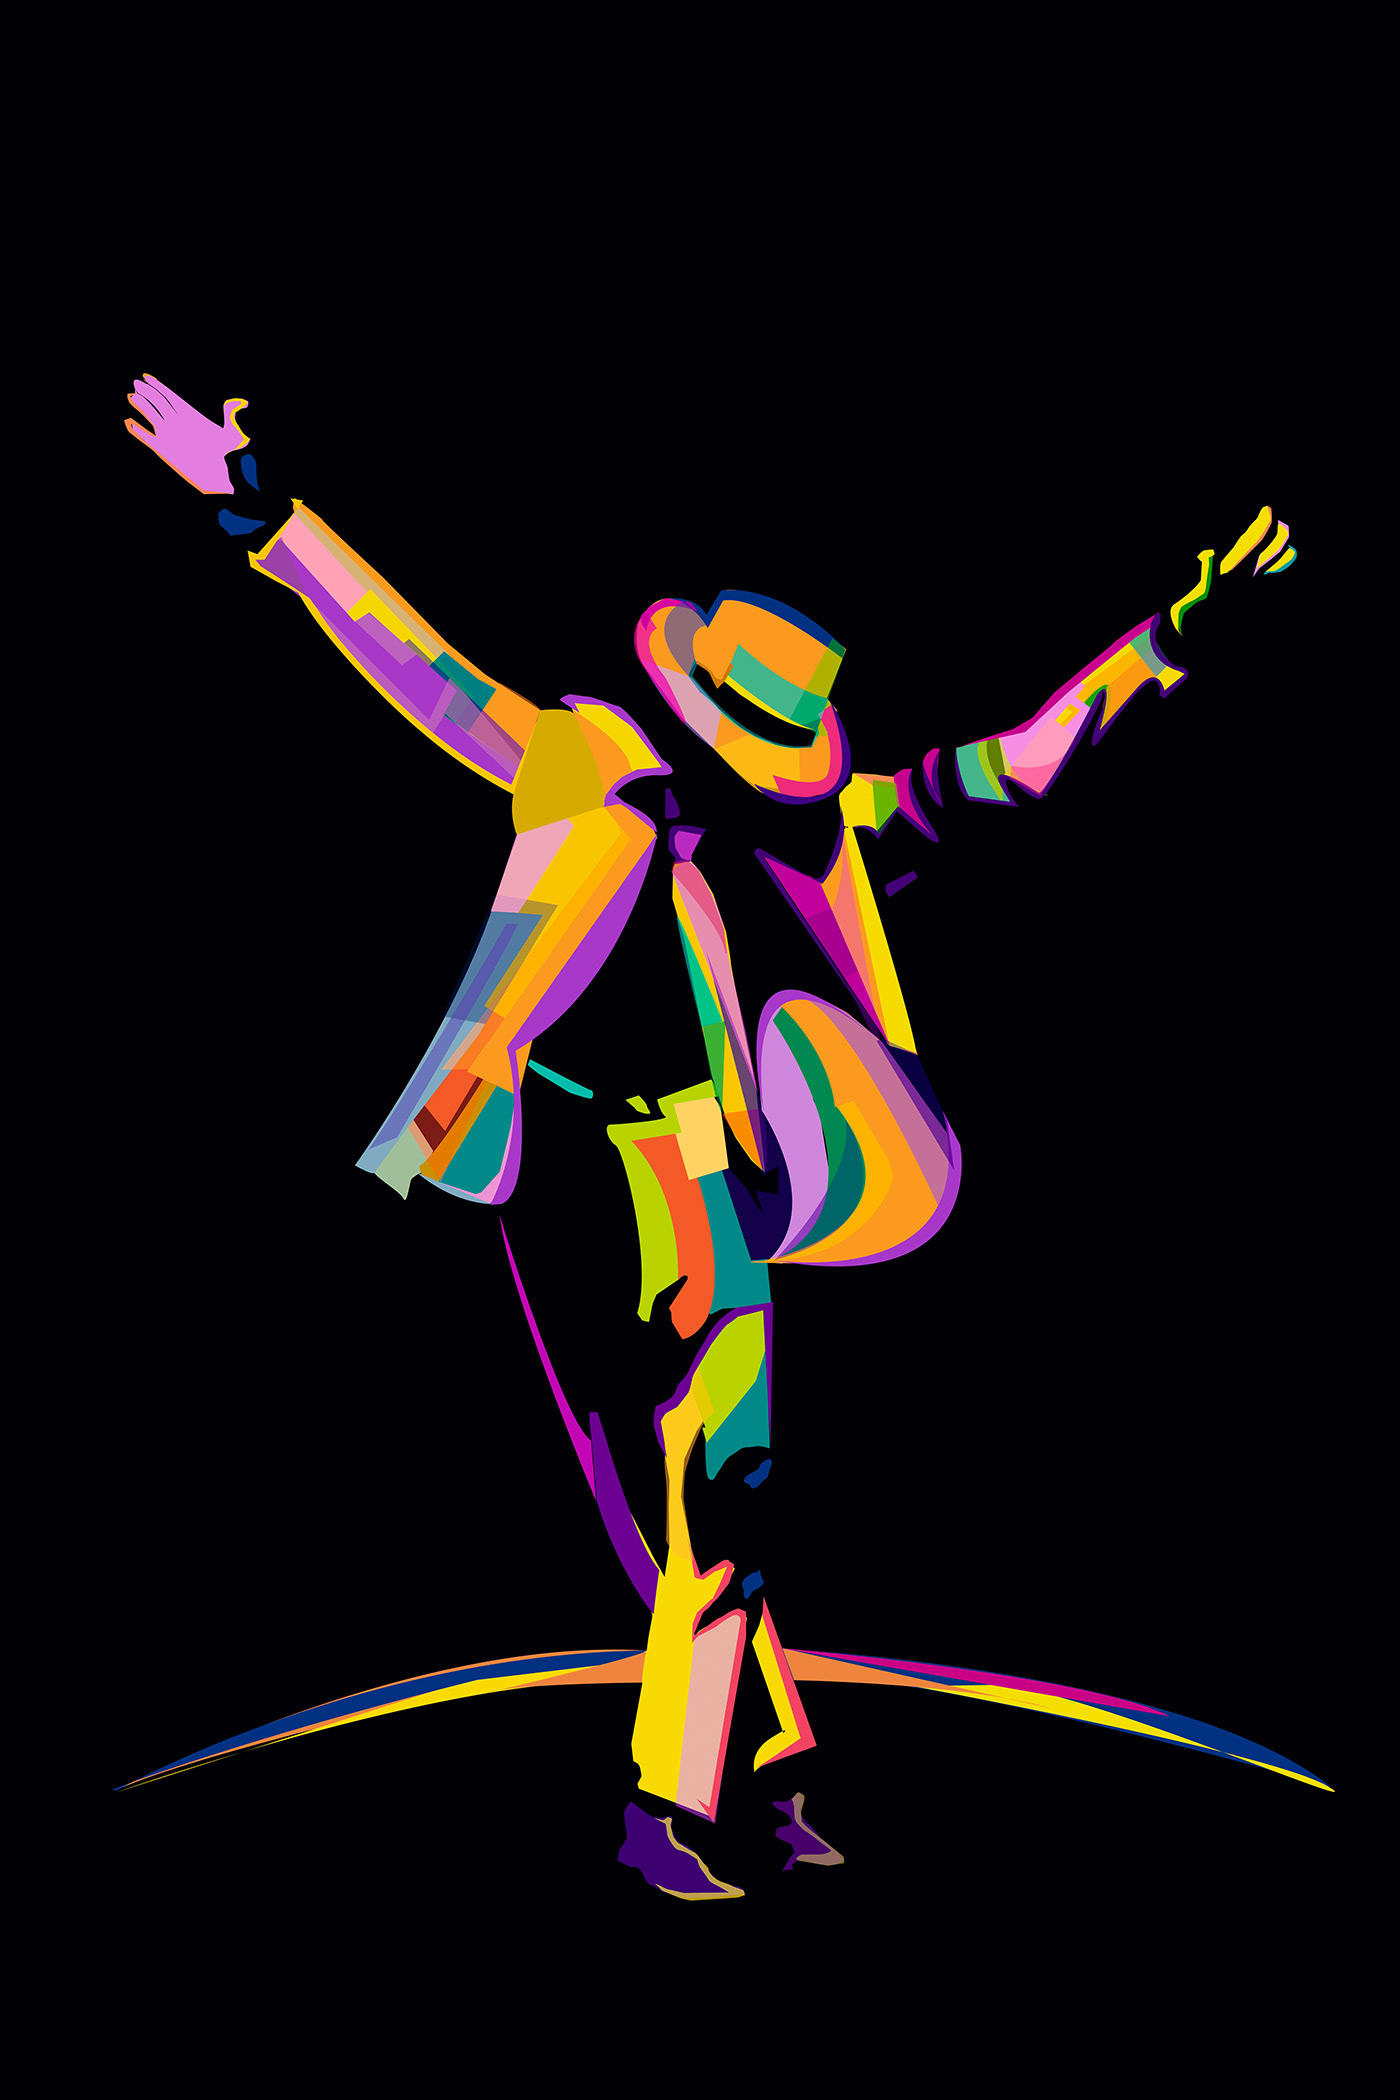 King of pop Michael Jackson WPAP ART wpapdesign